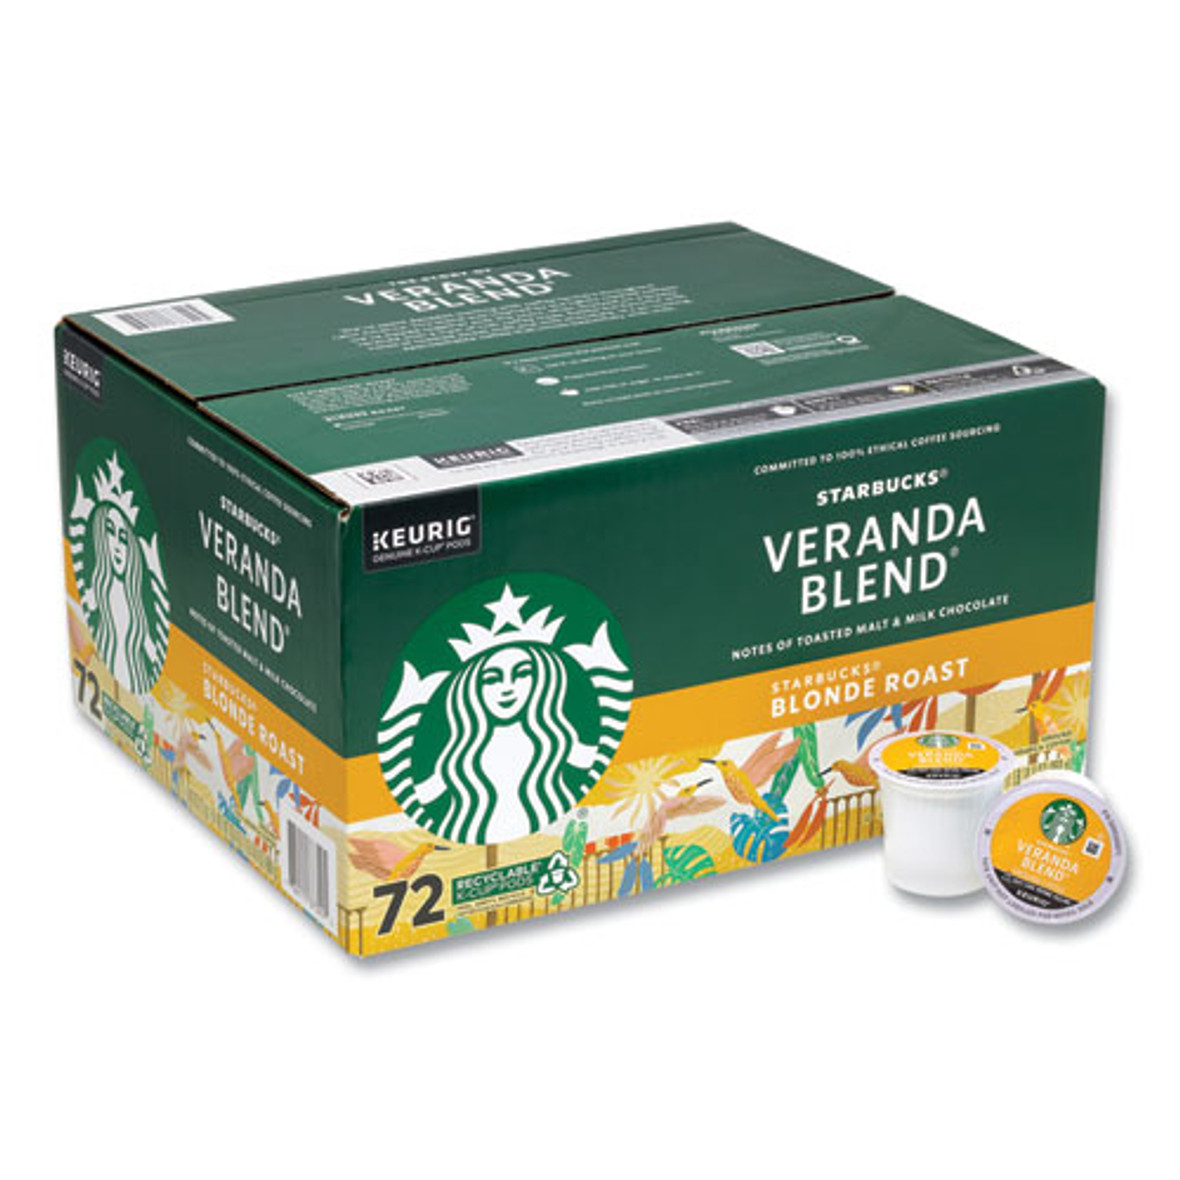 Starbucks Veranda Blend Coffee K-cups, 72/carton